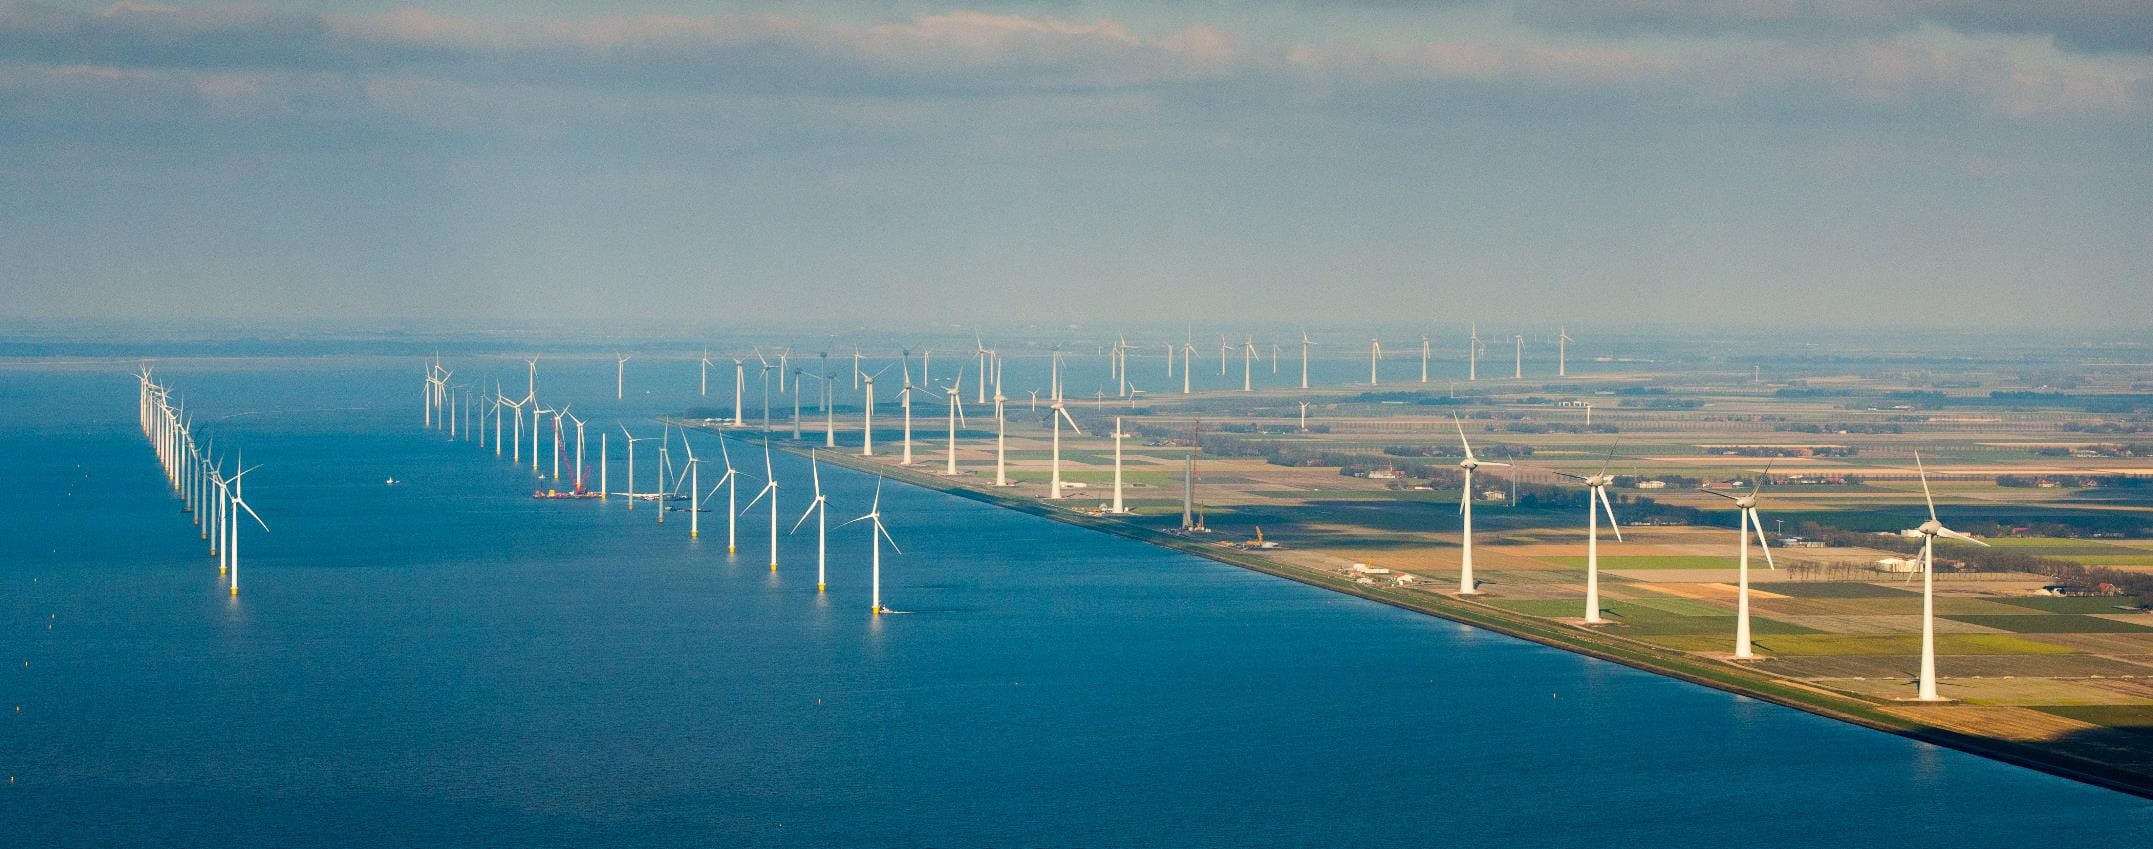 Offshore wind park in the Dutch Lake Ijssel.